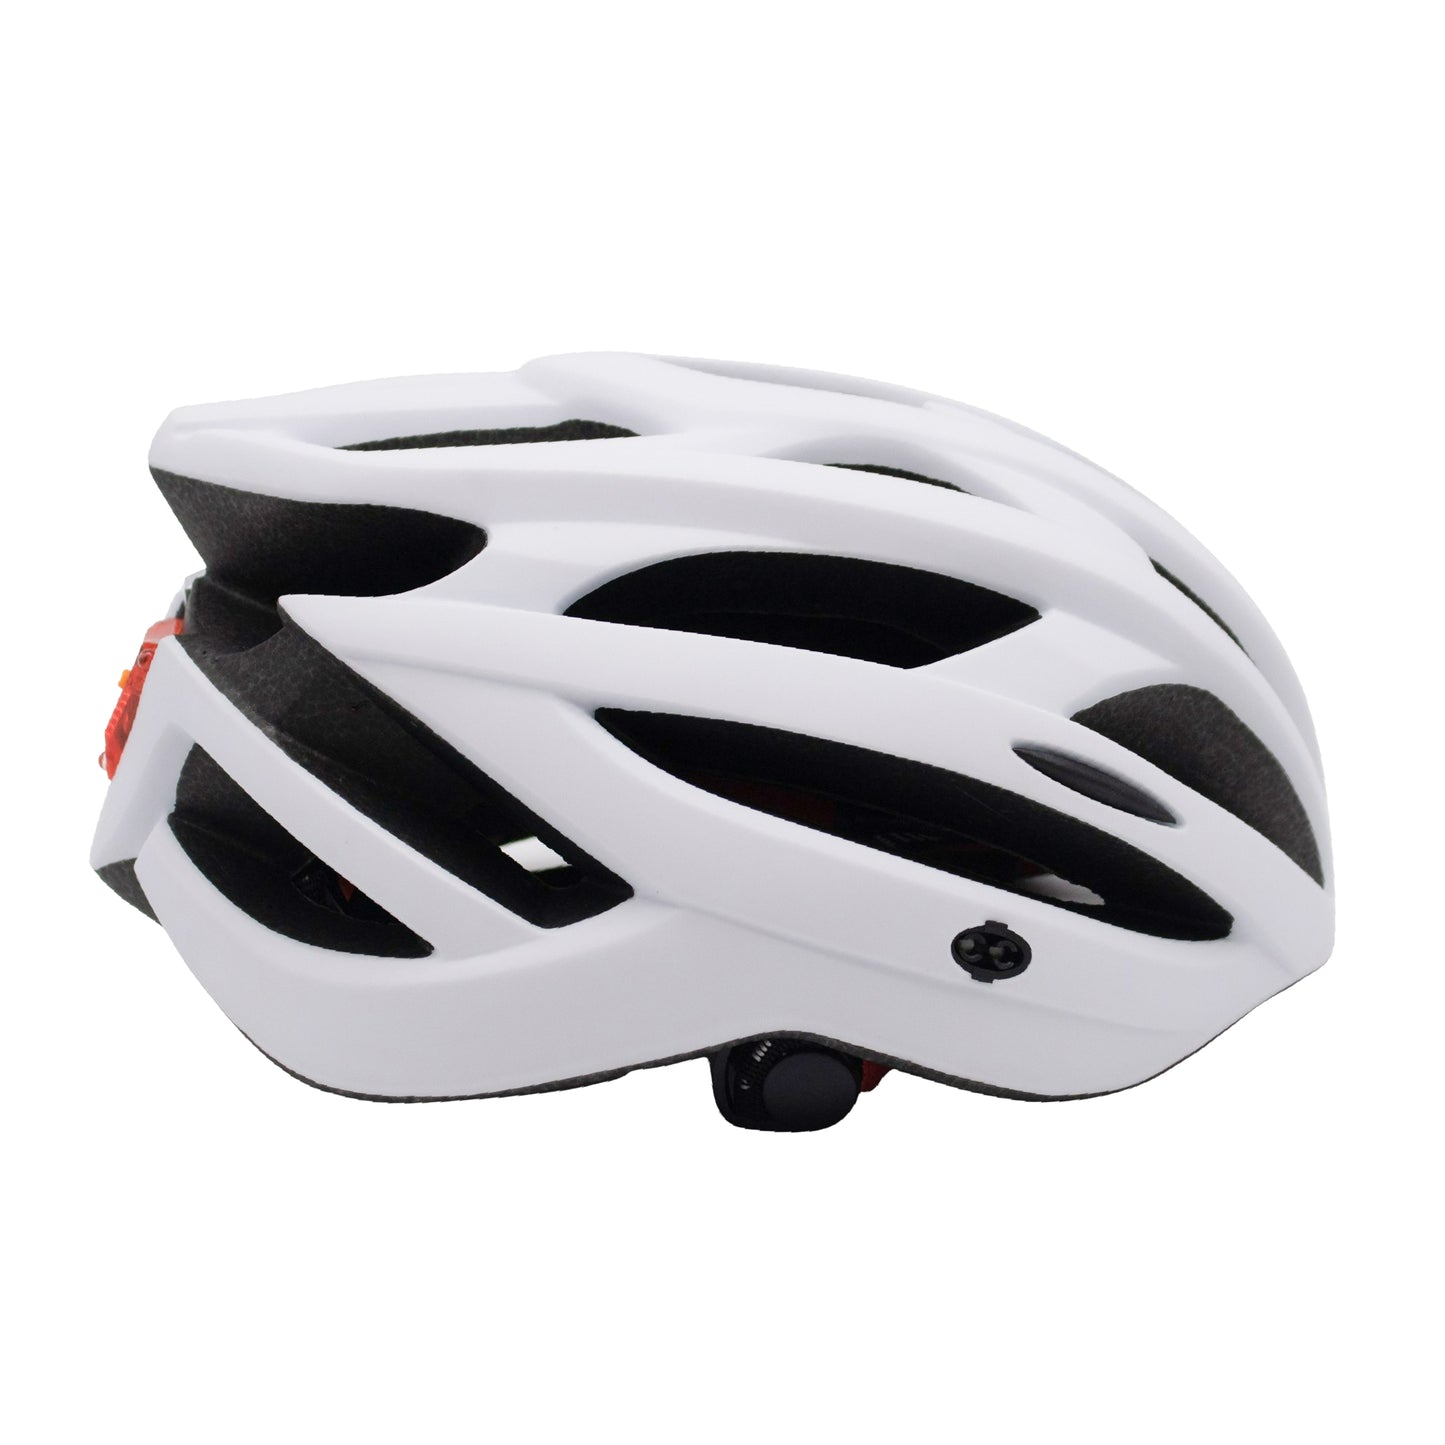 Rehook Resilience Cycling Helmet Matt Ultra White